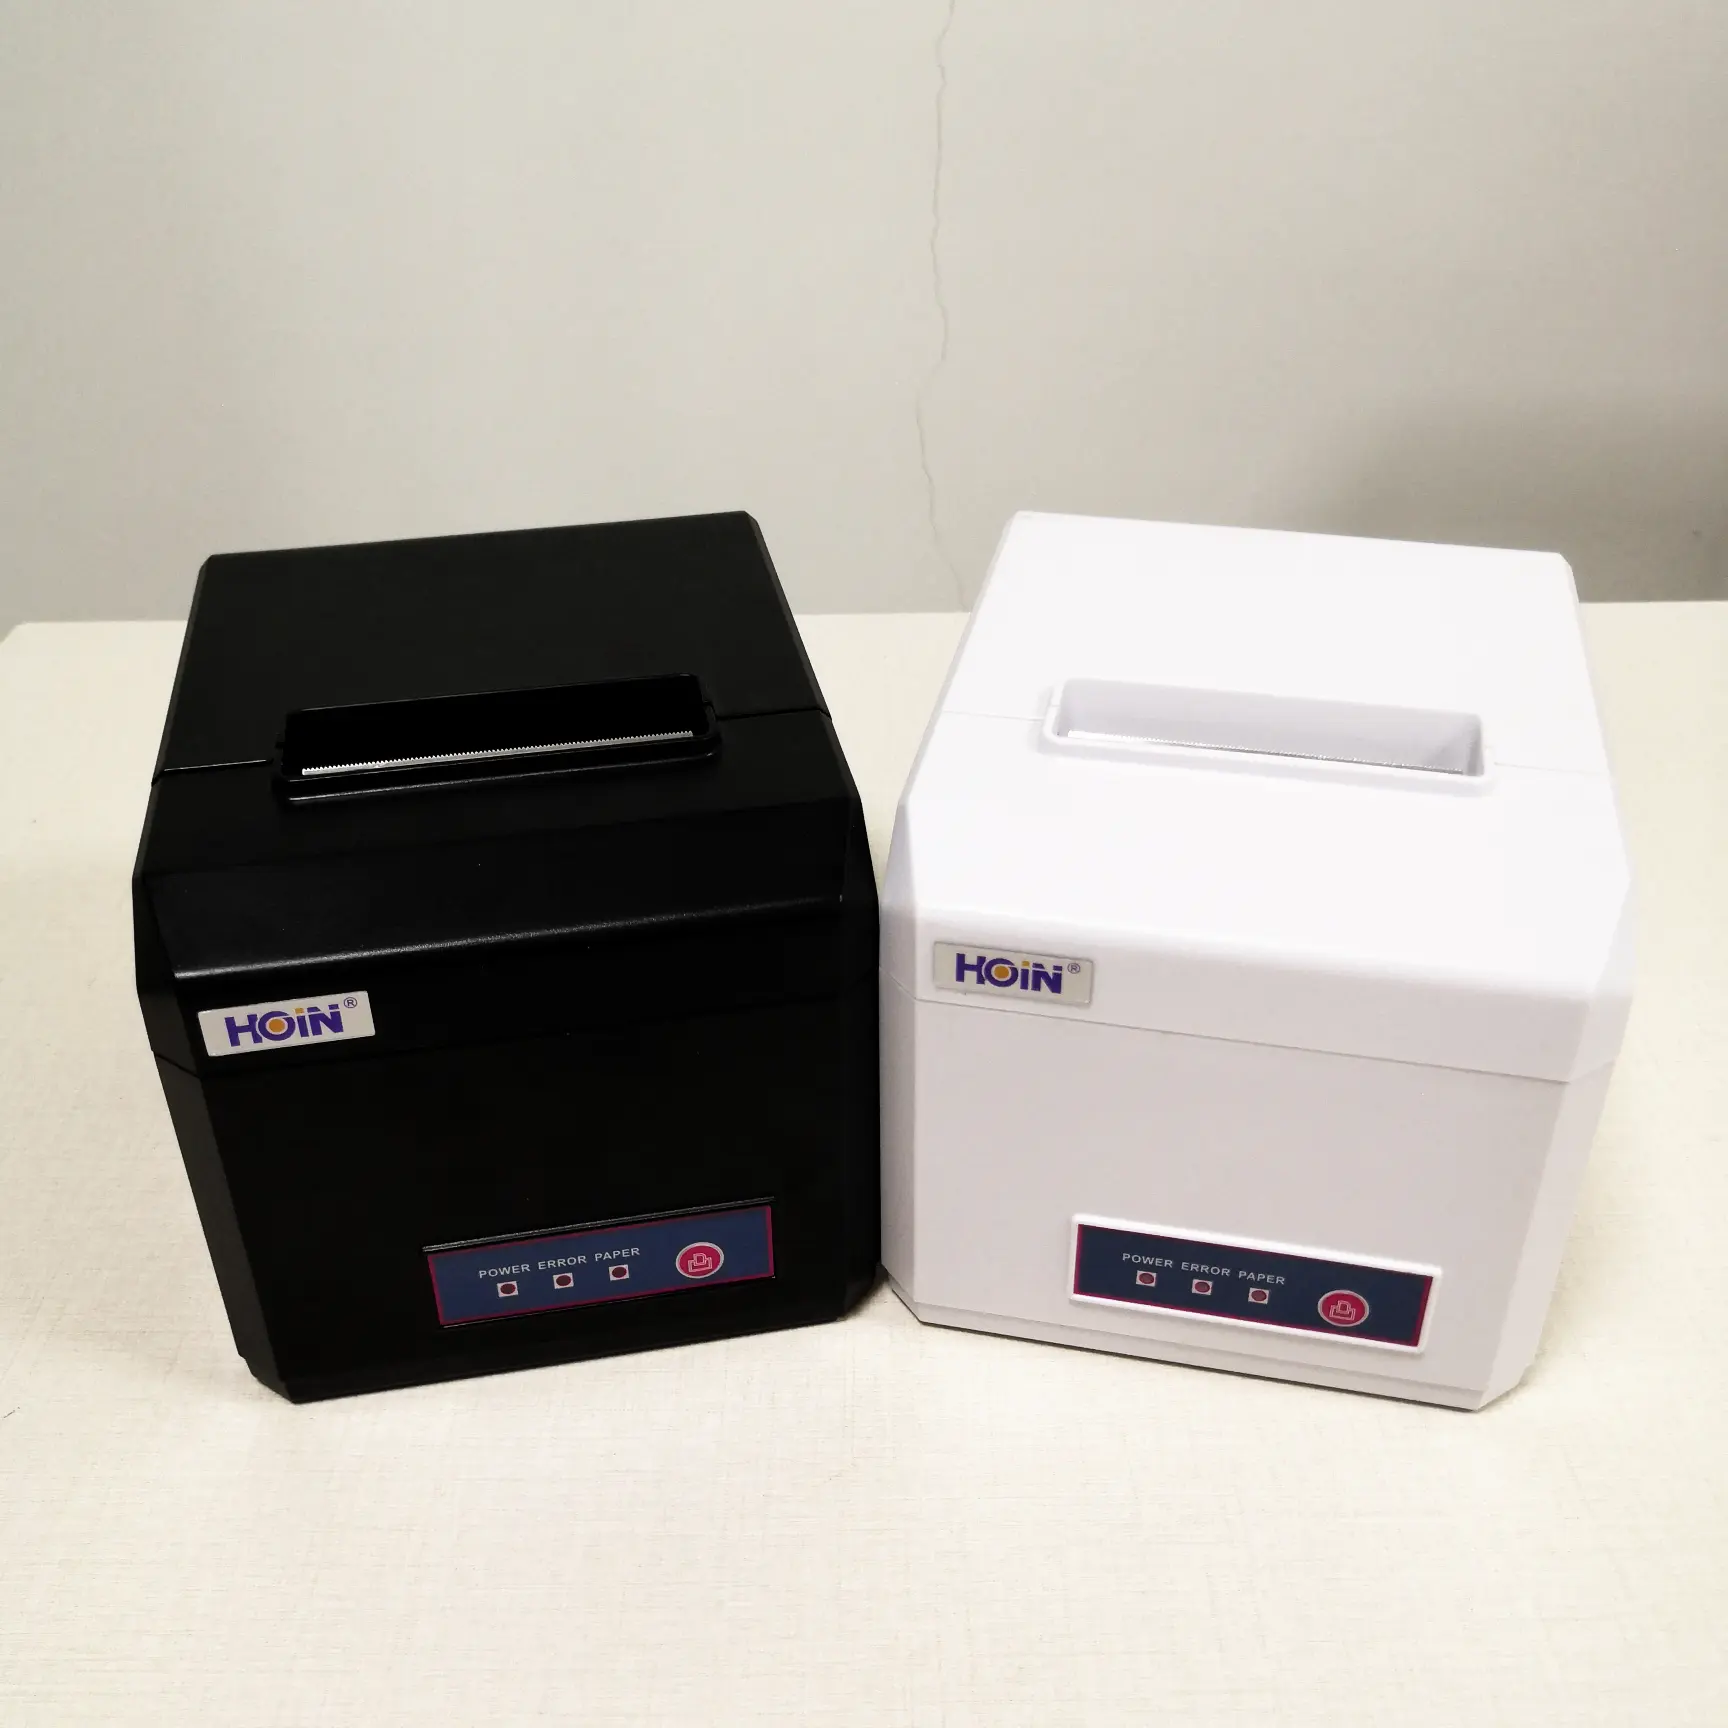 80mm קופה קבלת מדפסת עם חותך אוטומטי עבור הקמעונאי עסקי תרמית מדפסת קופה מערכת HOIN שחור ולבן 79.5 ± 0.5mm ESC/קופה